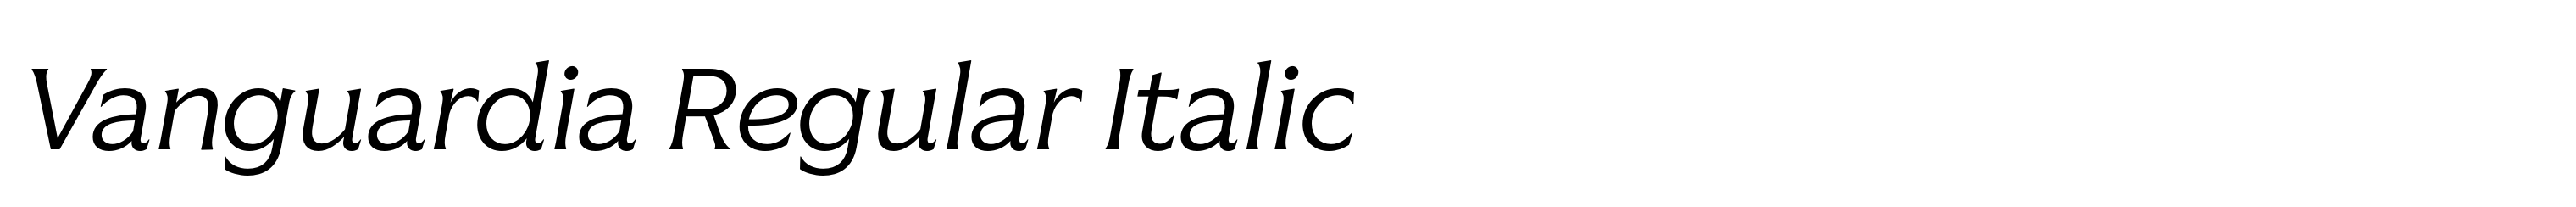 Vanguardia Regular Italic